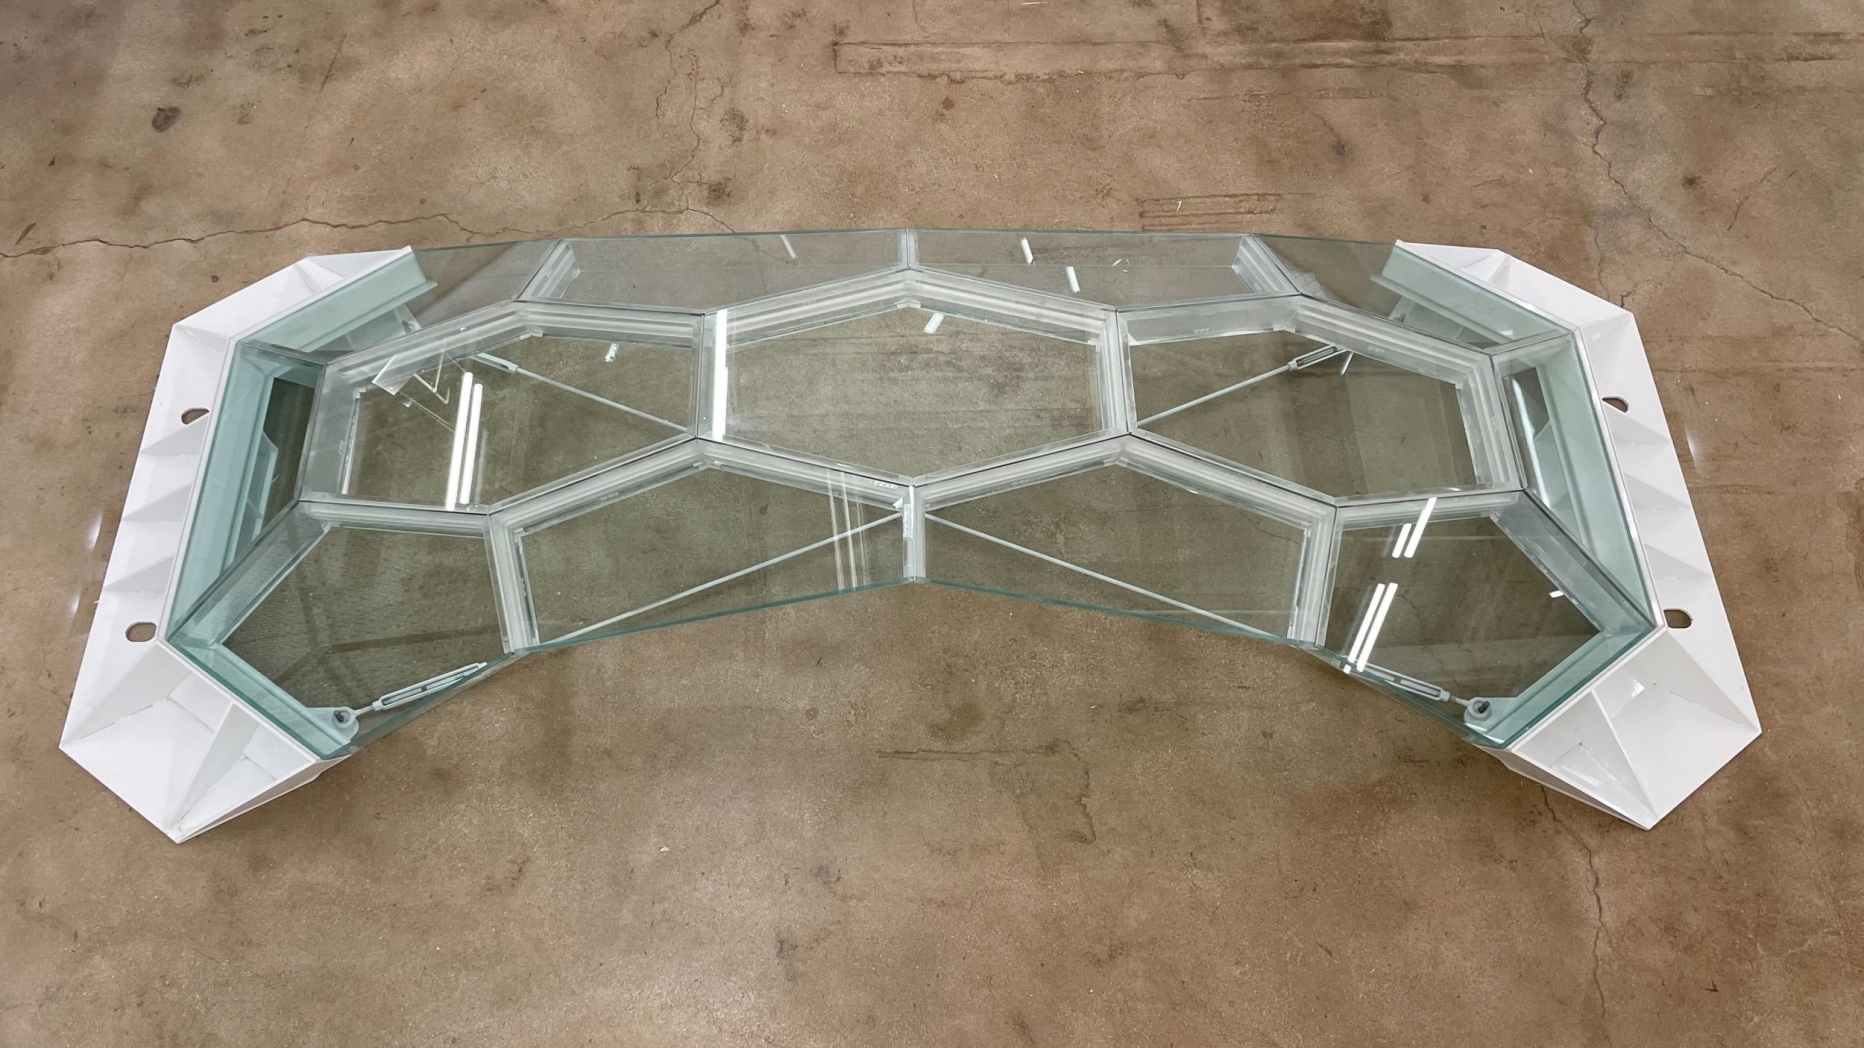 Tortuca: Hollow Glass Unit Bridge Prototype